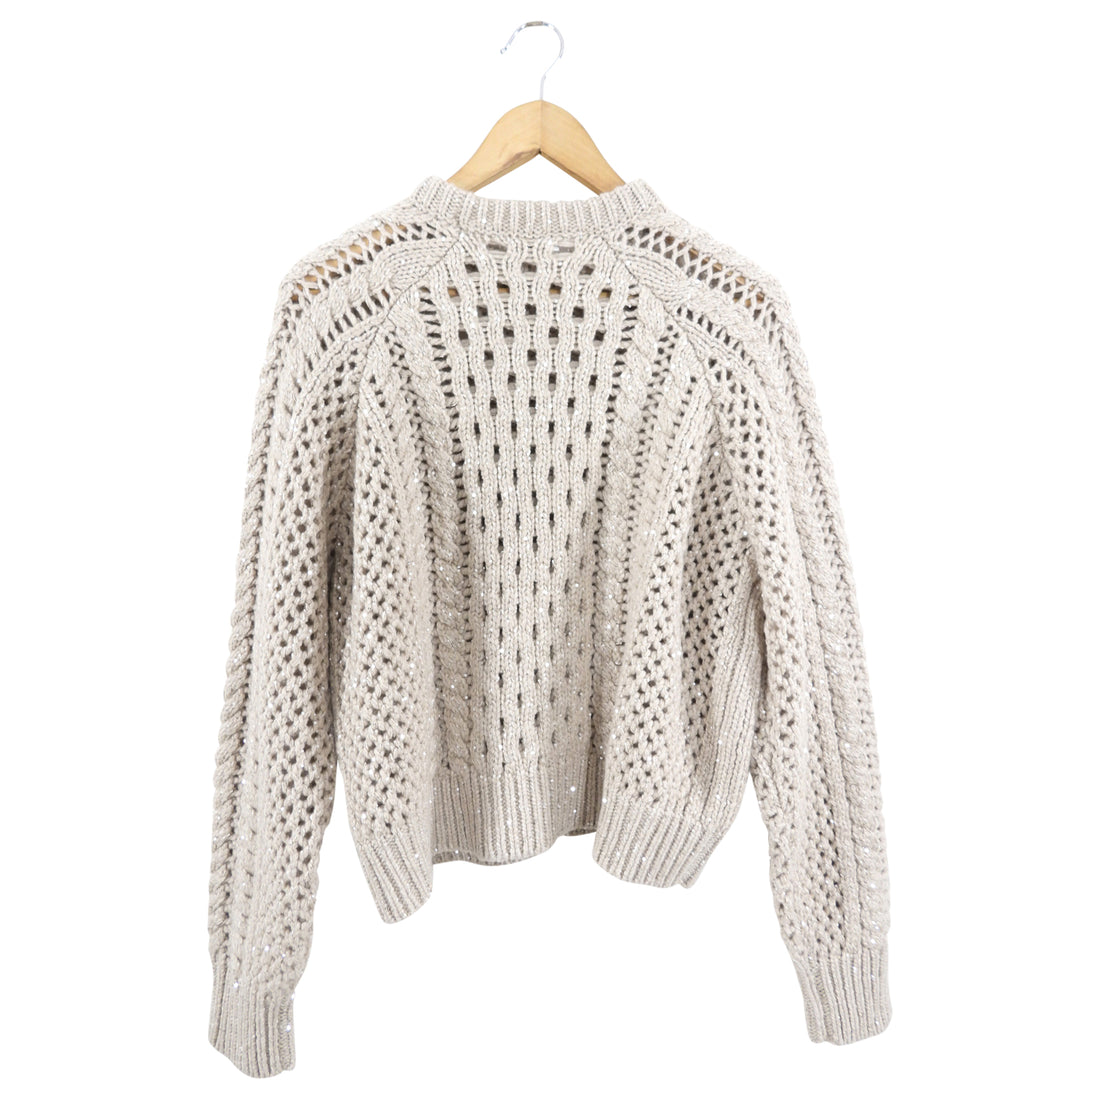 Brunello Cucinelli Beige Open Knit Cashmere Sequin Sweater - S (4/6)